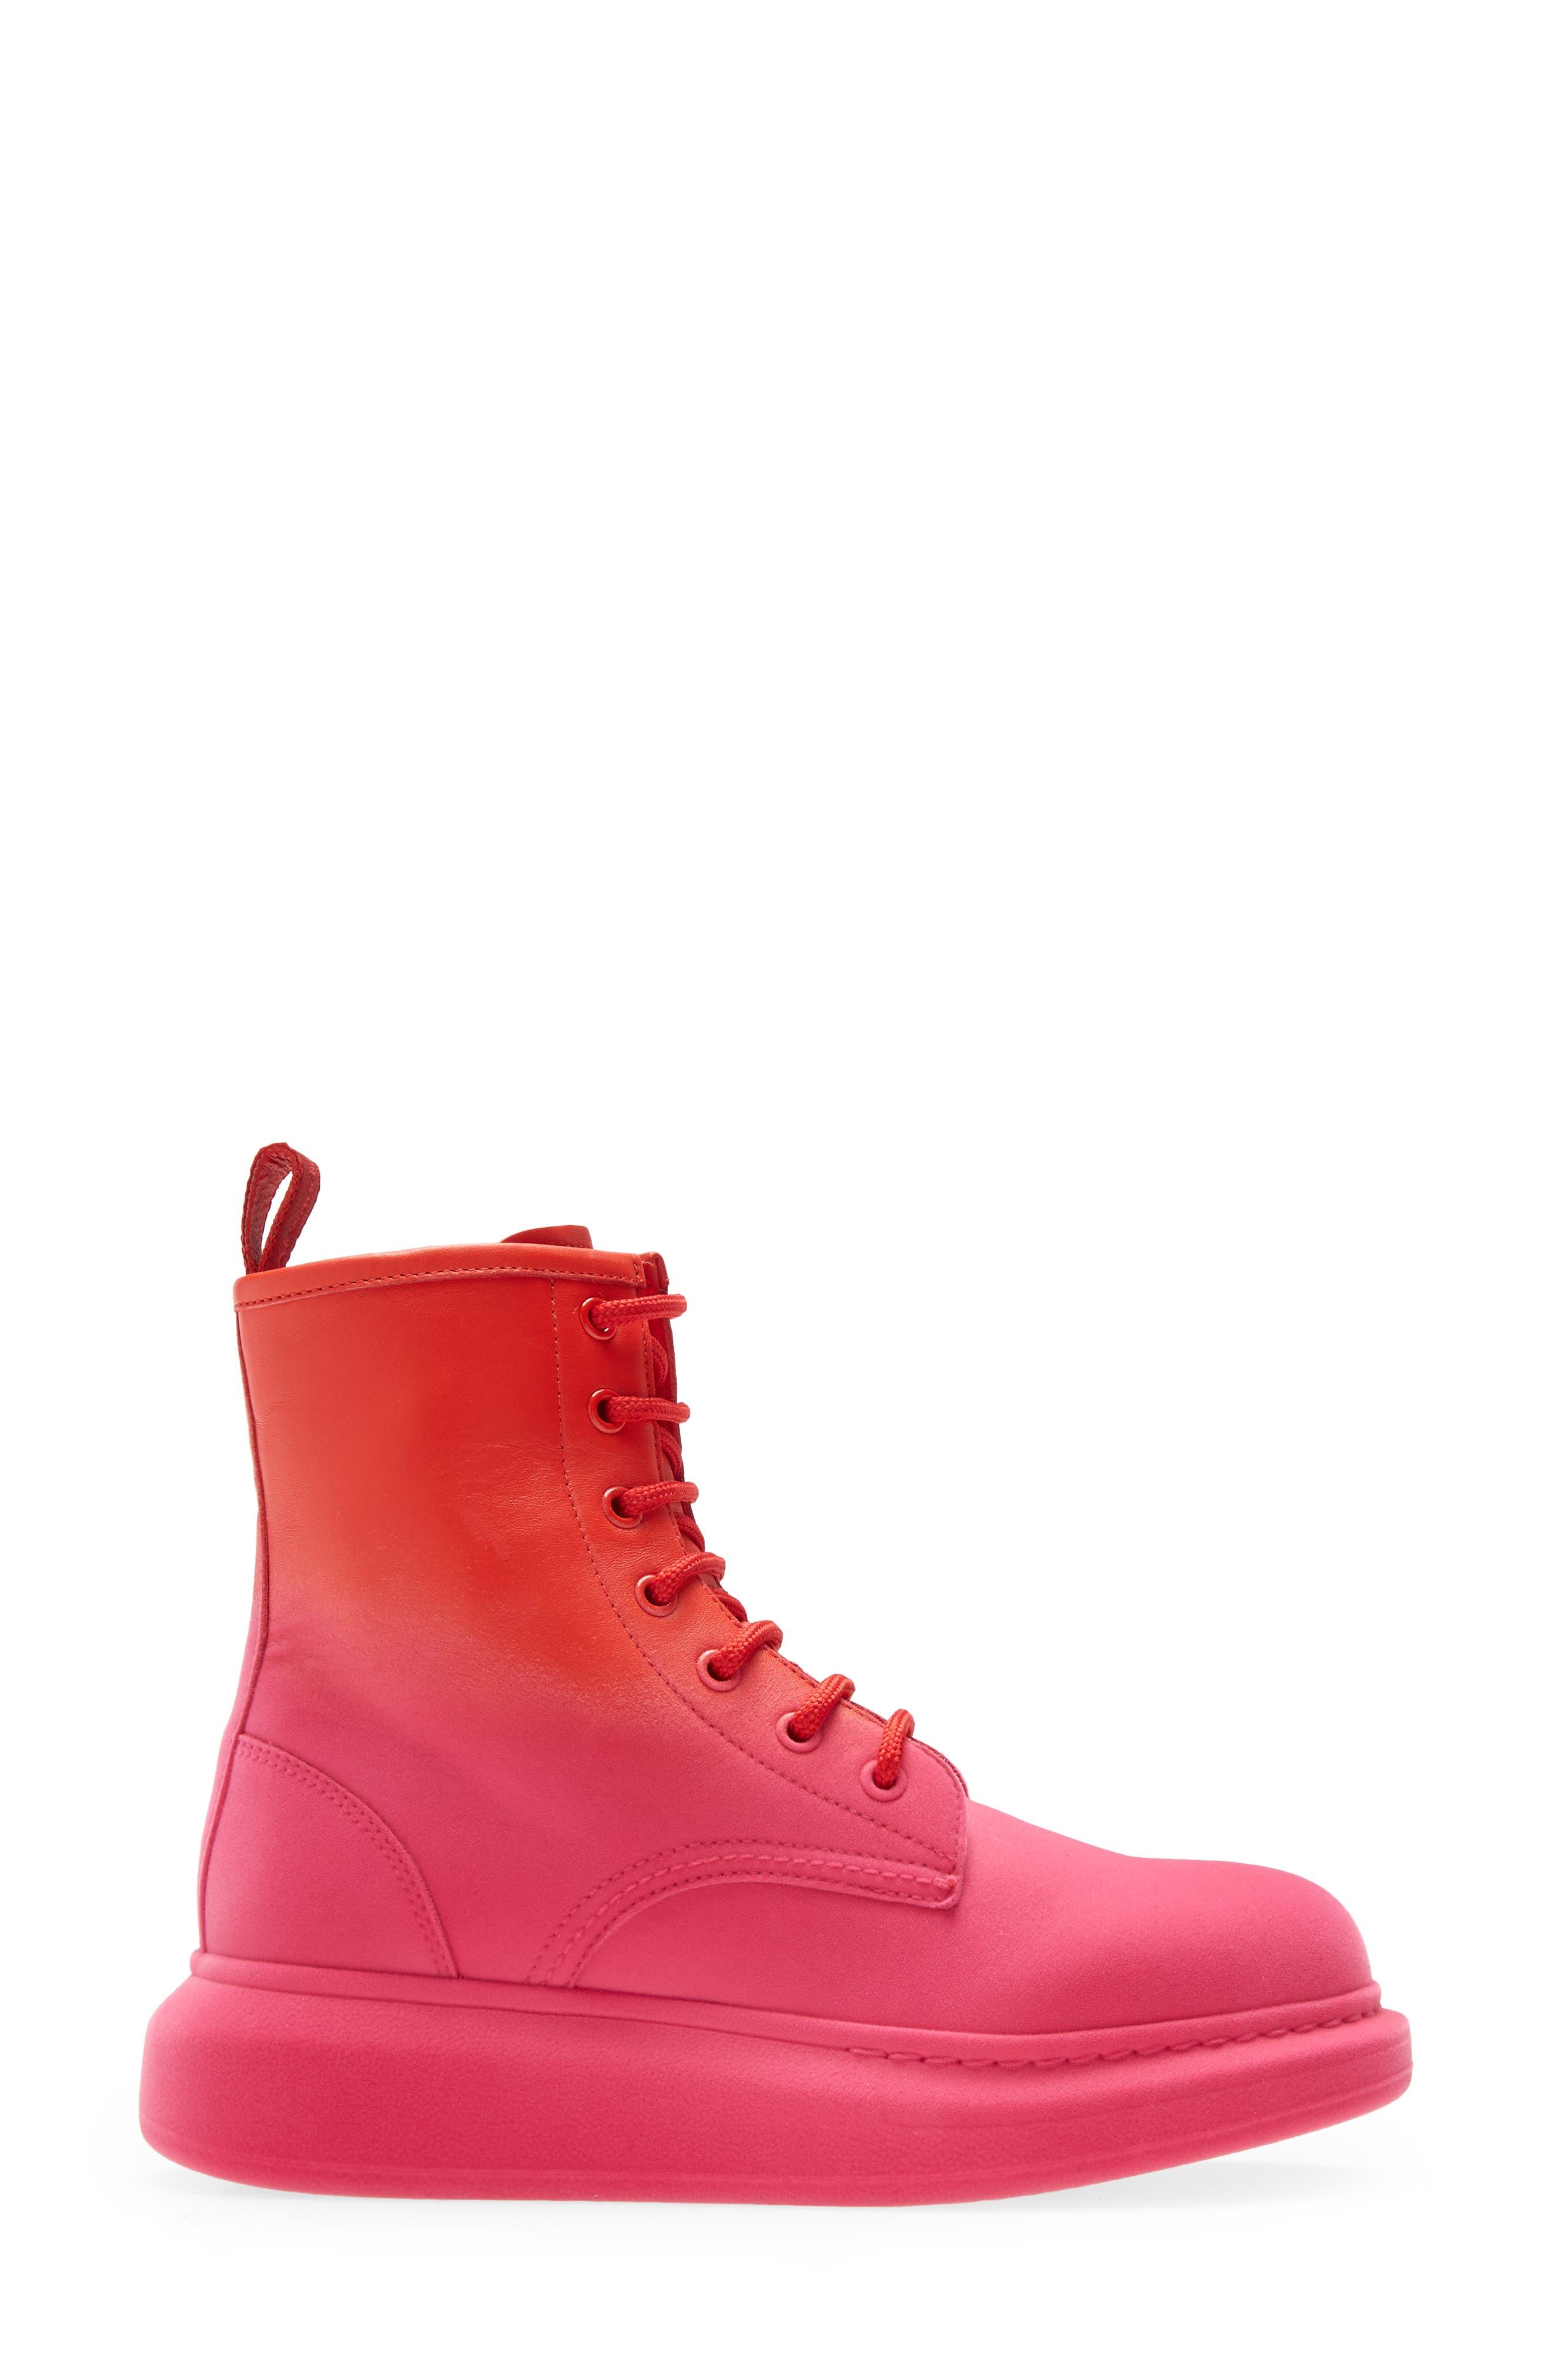 Alexander McQueen Women's Pink Boots